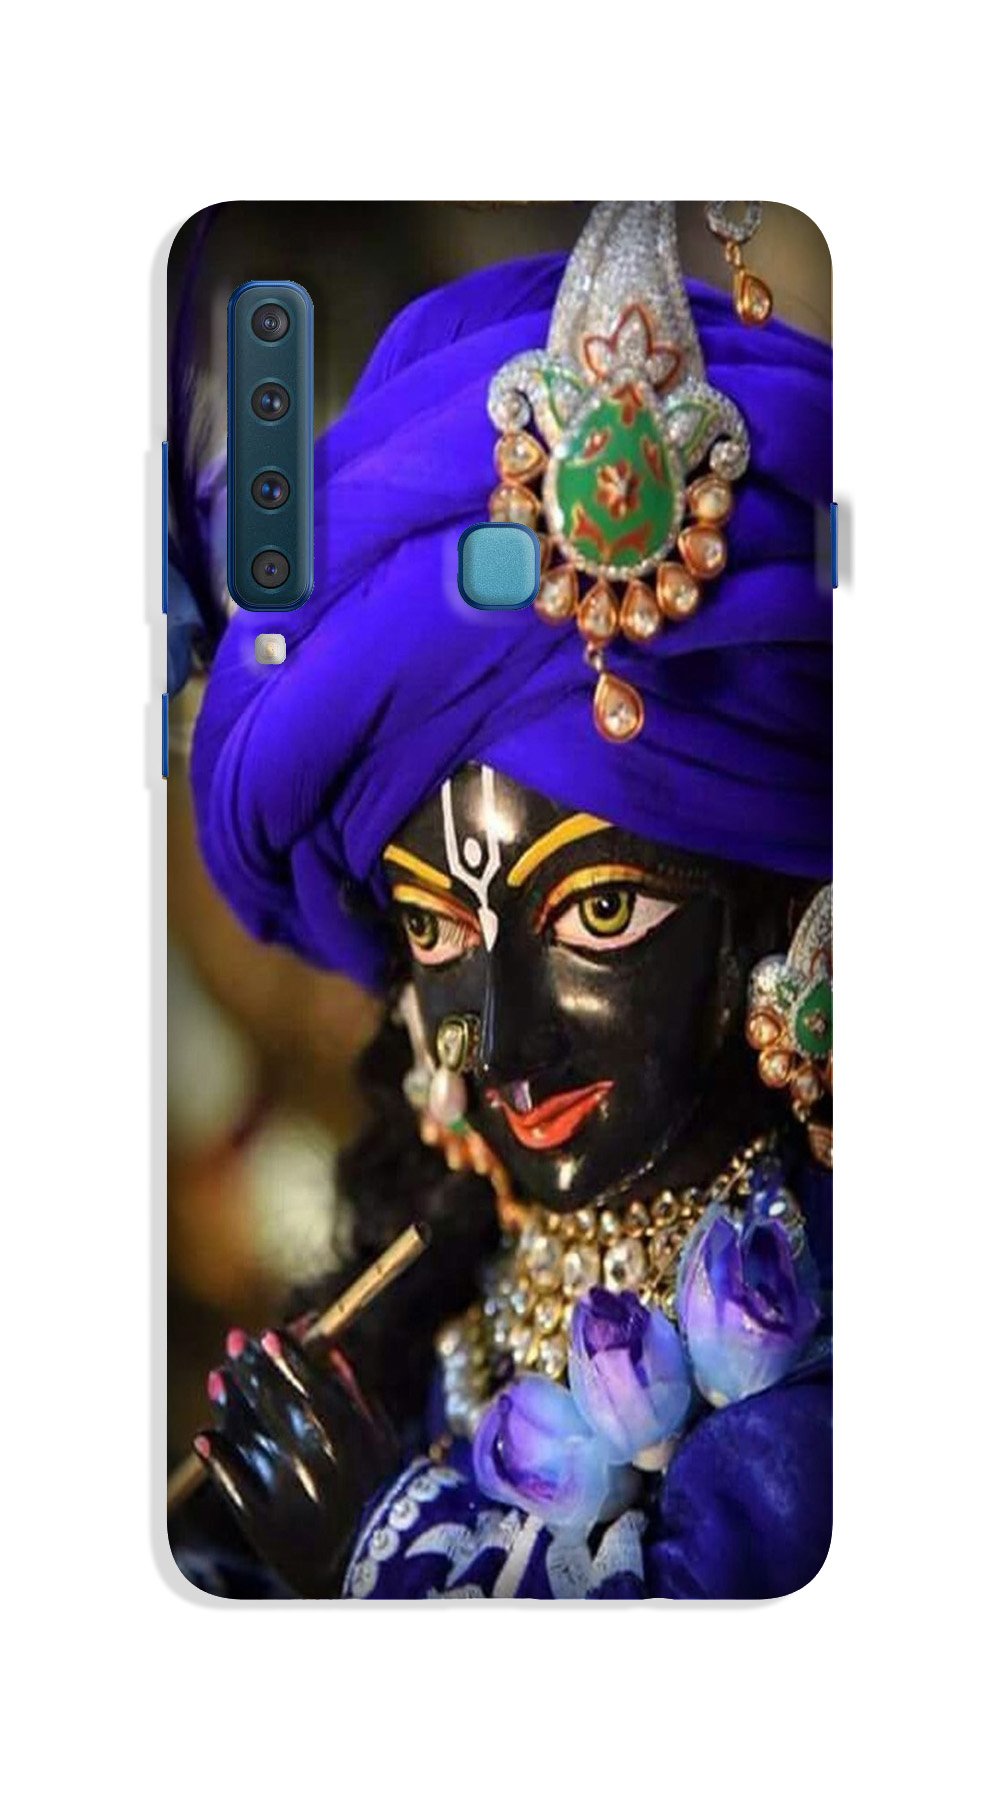 Lord Krishna4 Case for Galaxy A9 (2018)